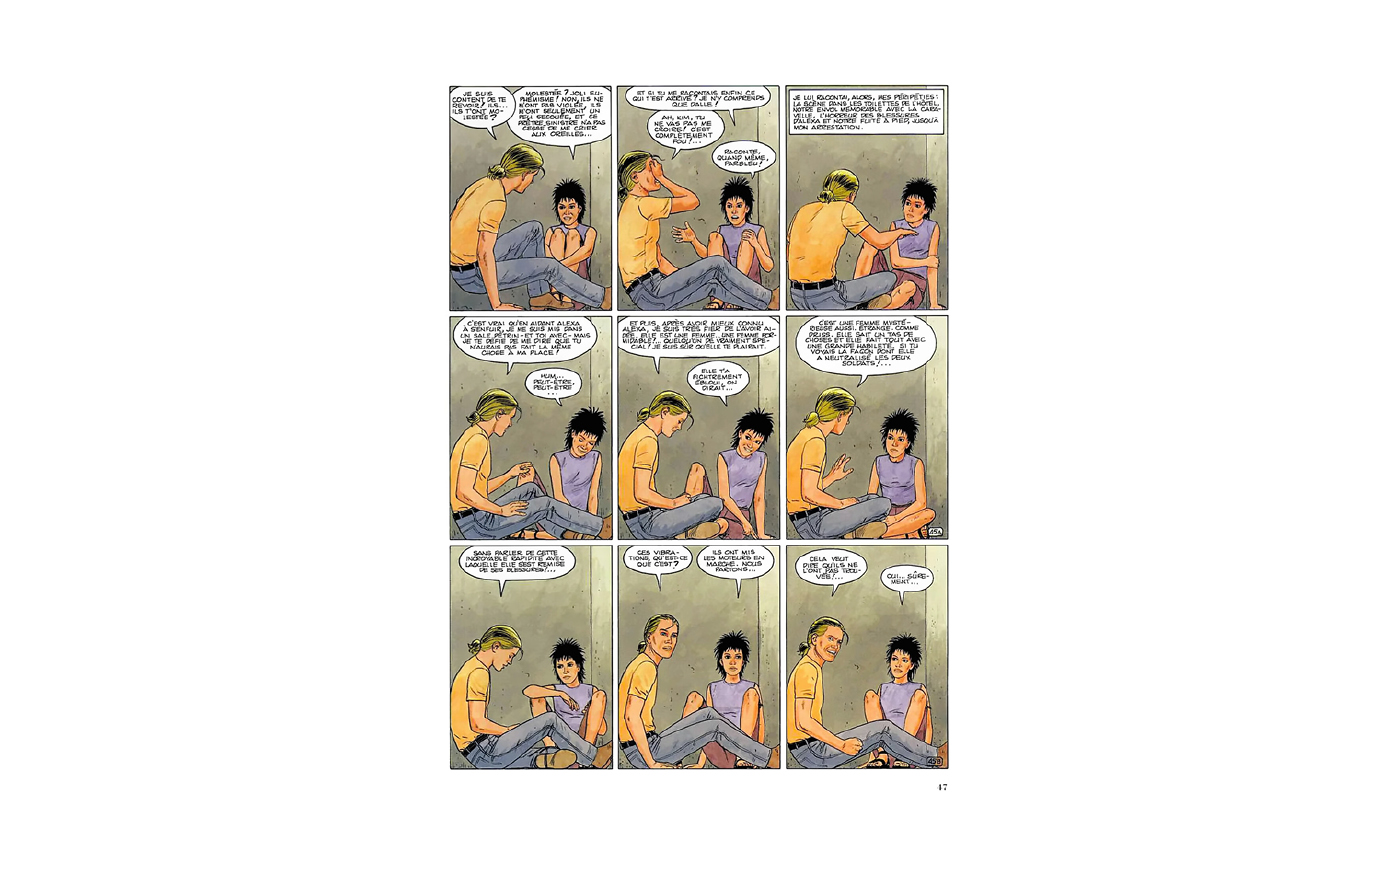 160921-witte-rook-graphic-design-comics-5-narrative-1